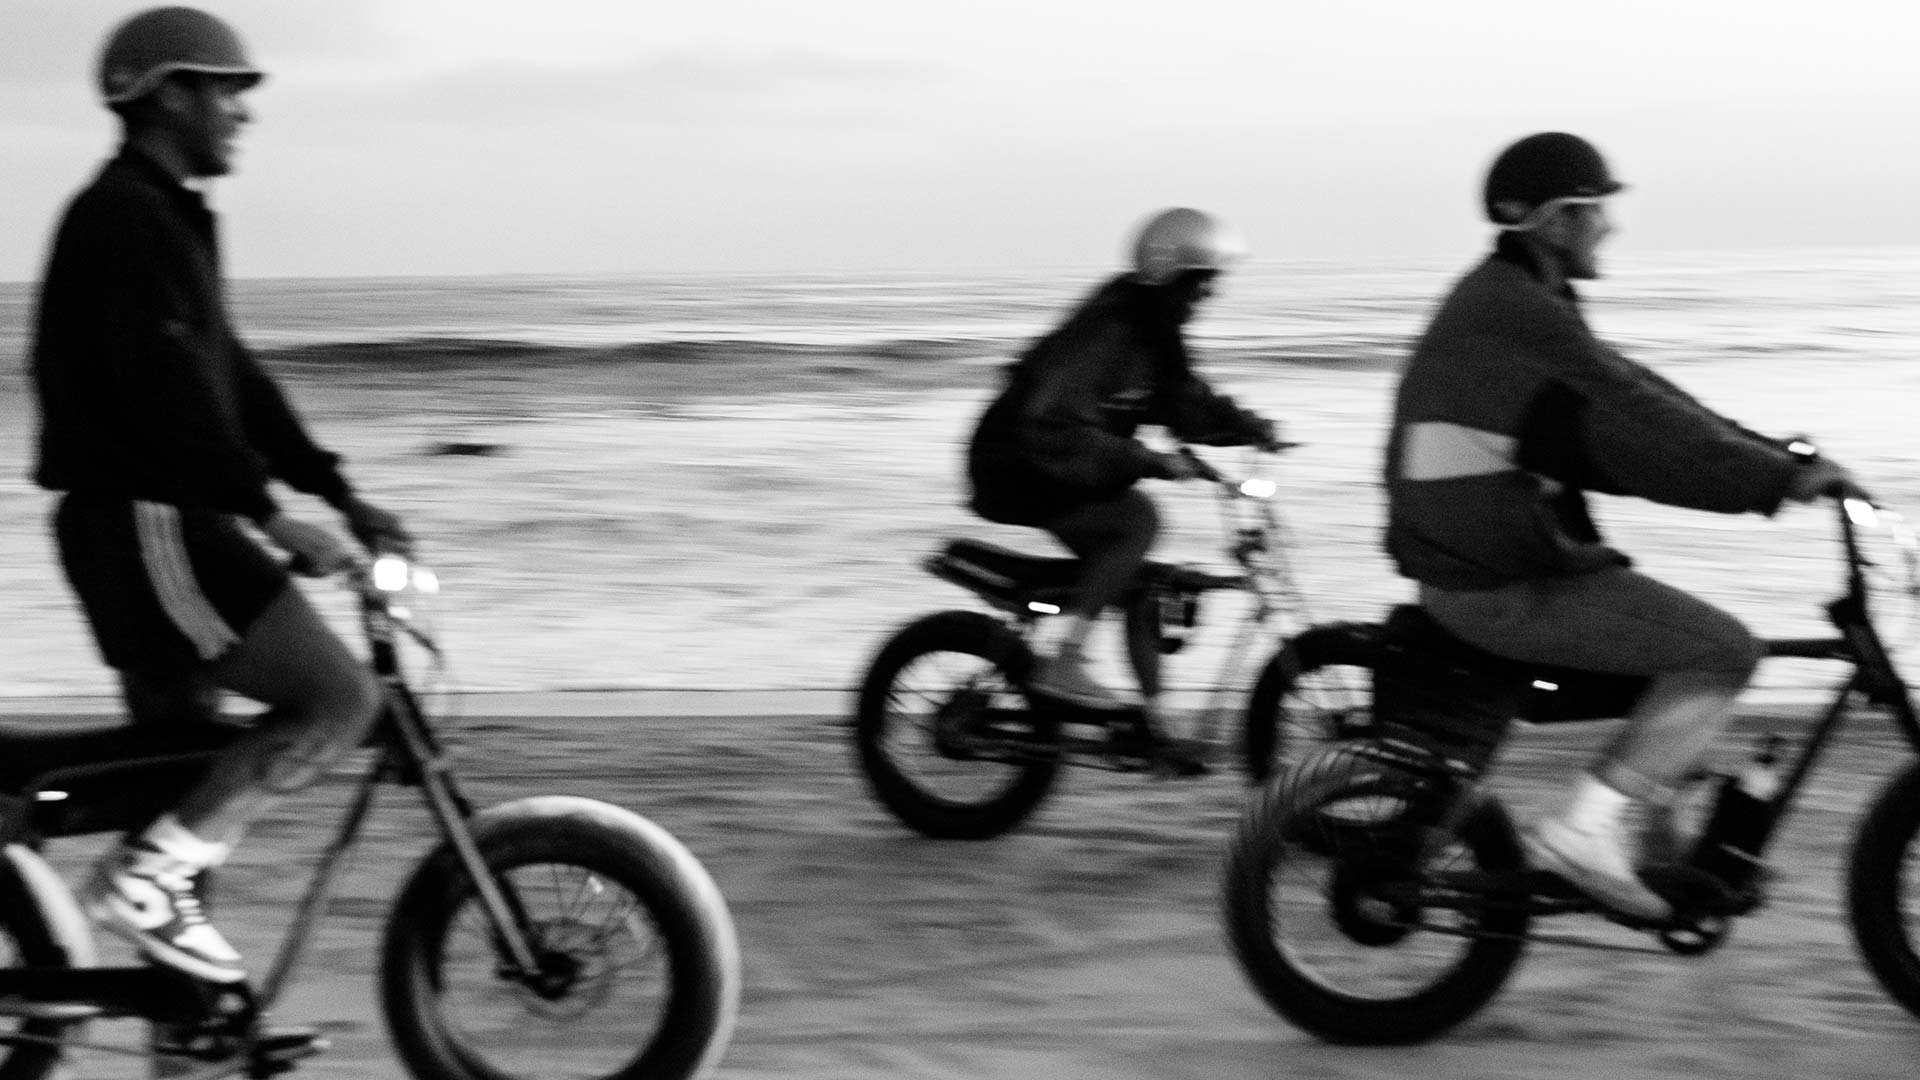 Blurry black and white shot of riders on Super73 ebikes near shoreline